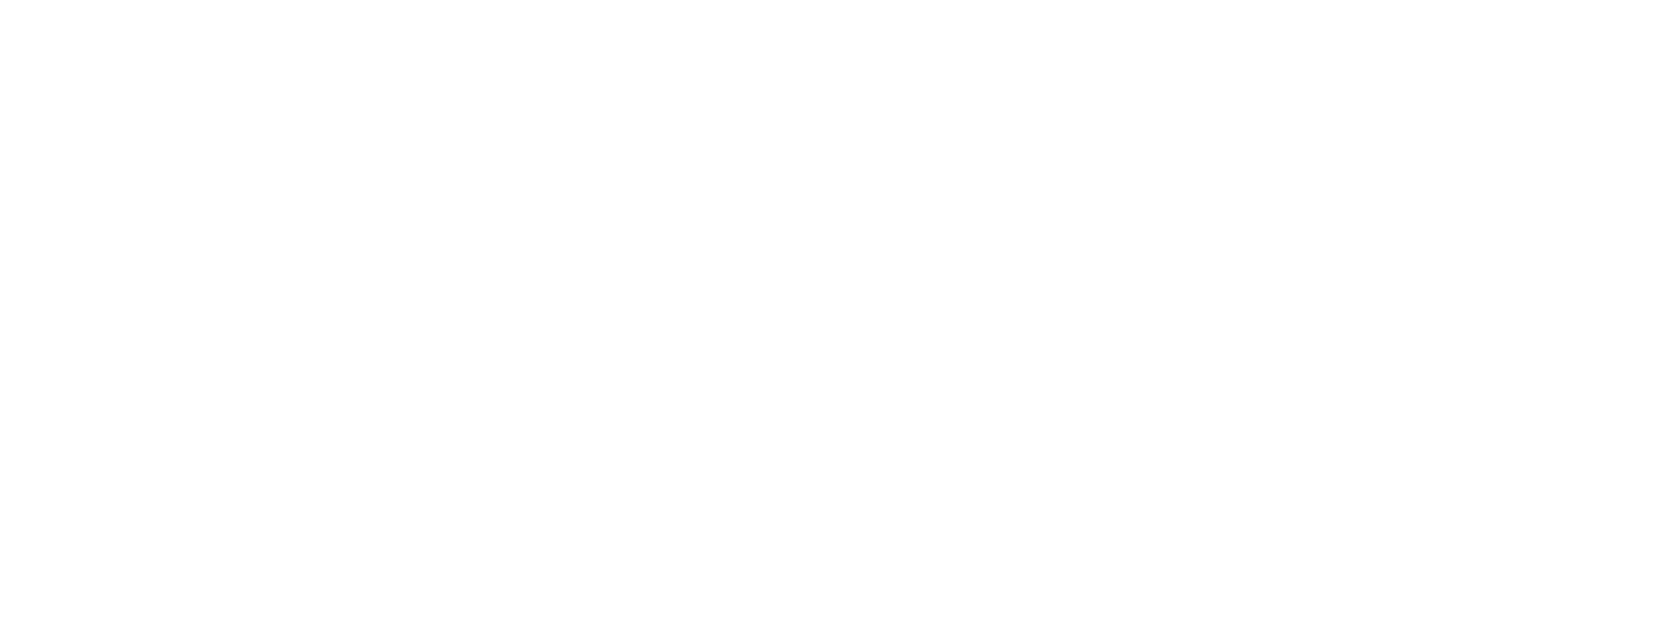 Logotipo Frigicoll blanco